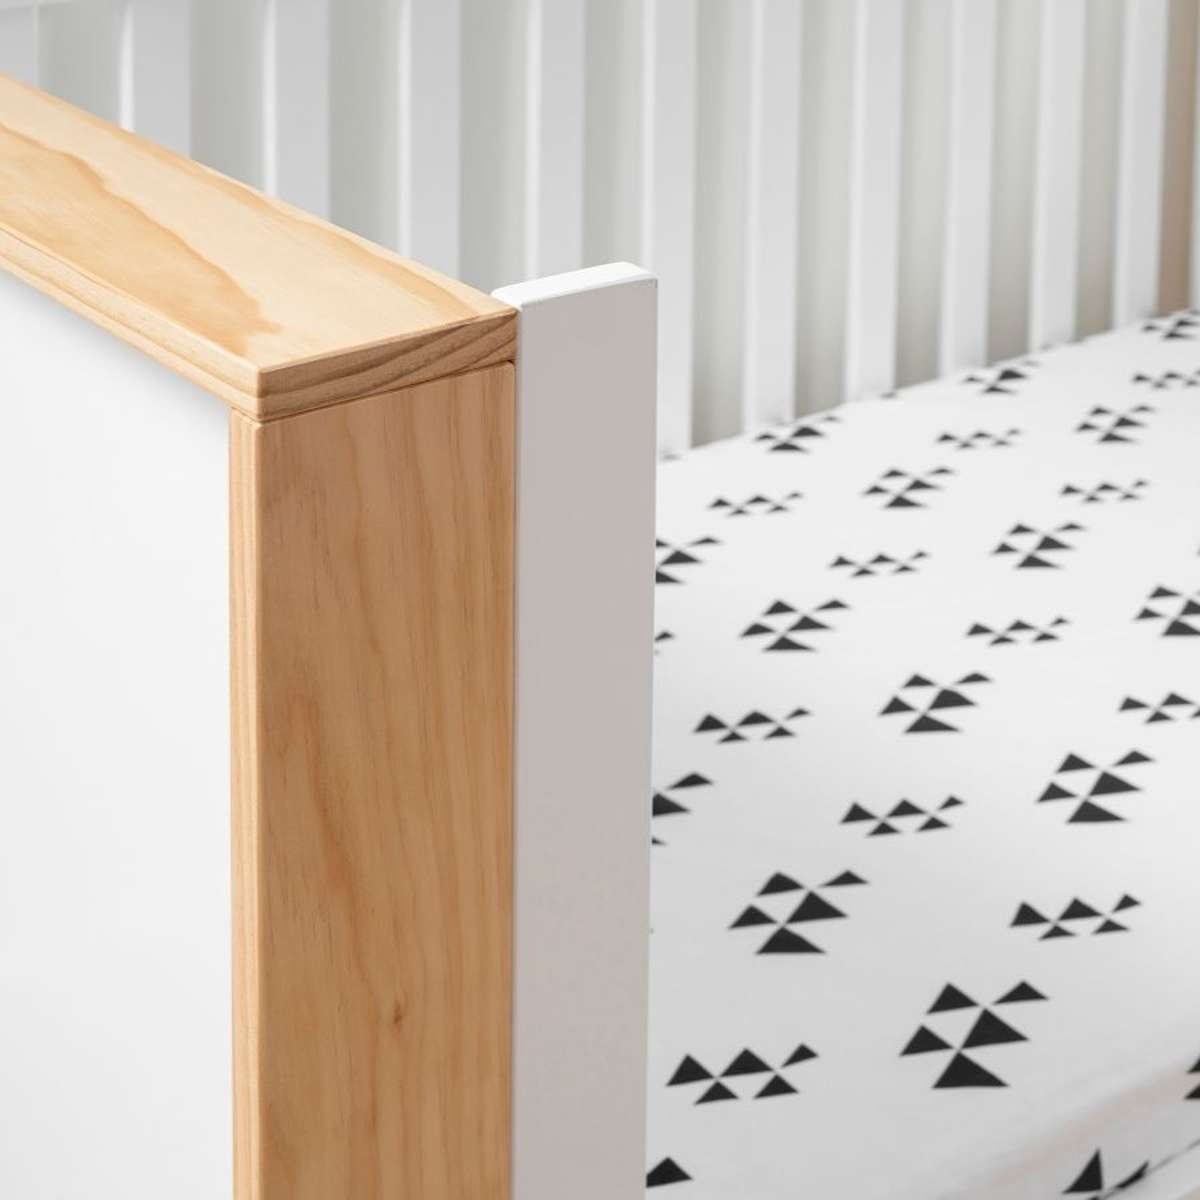 Boston Cot Toddler Bed Conversion - White